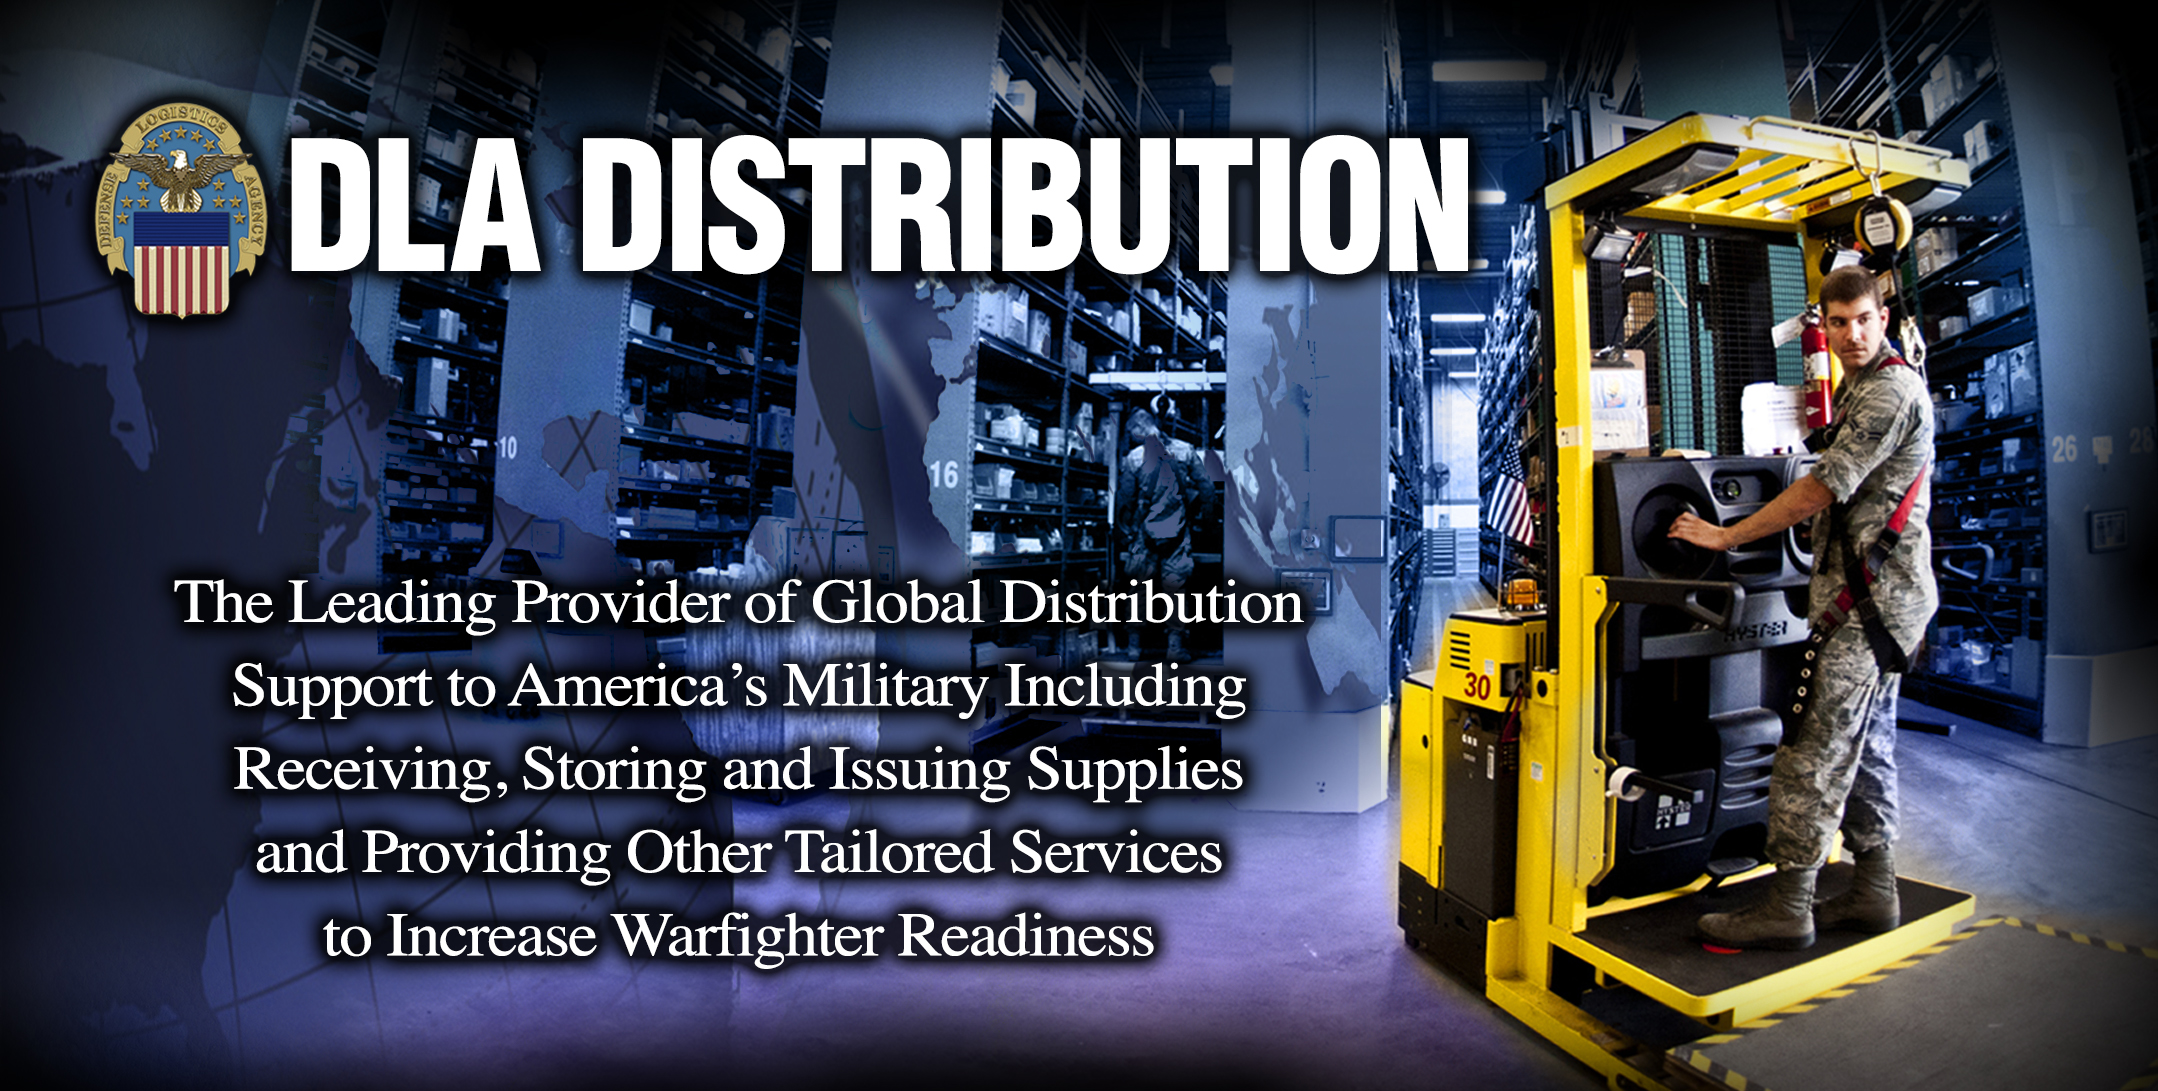 DLA Distribution